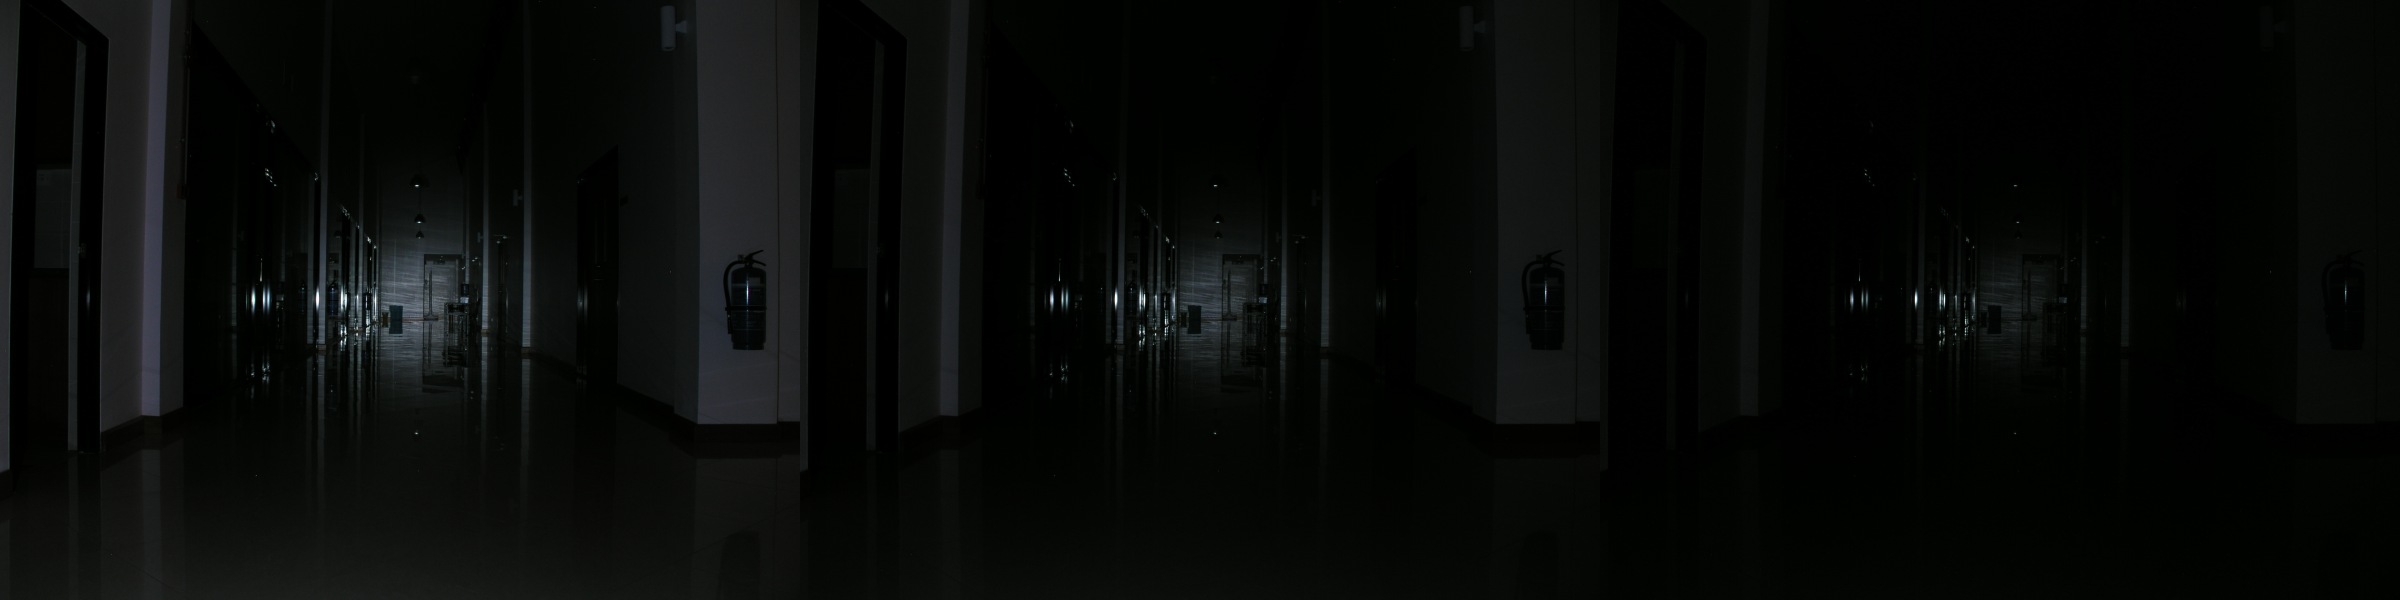 Corridor-Fenix P1.jpg